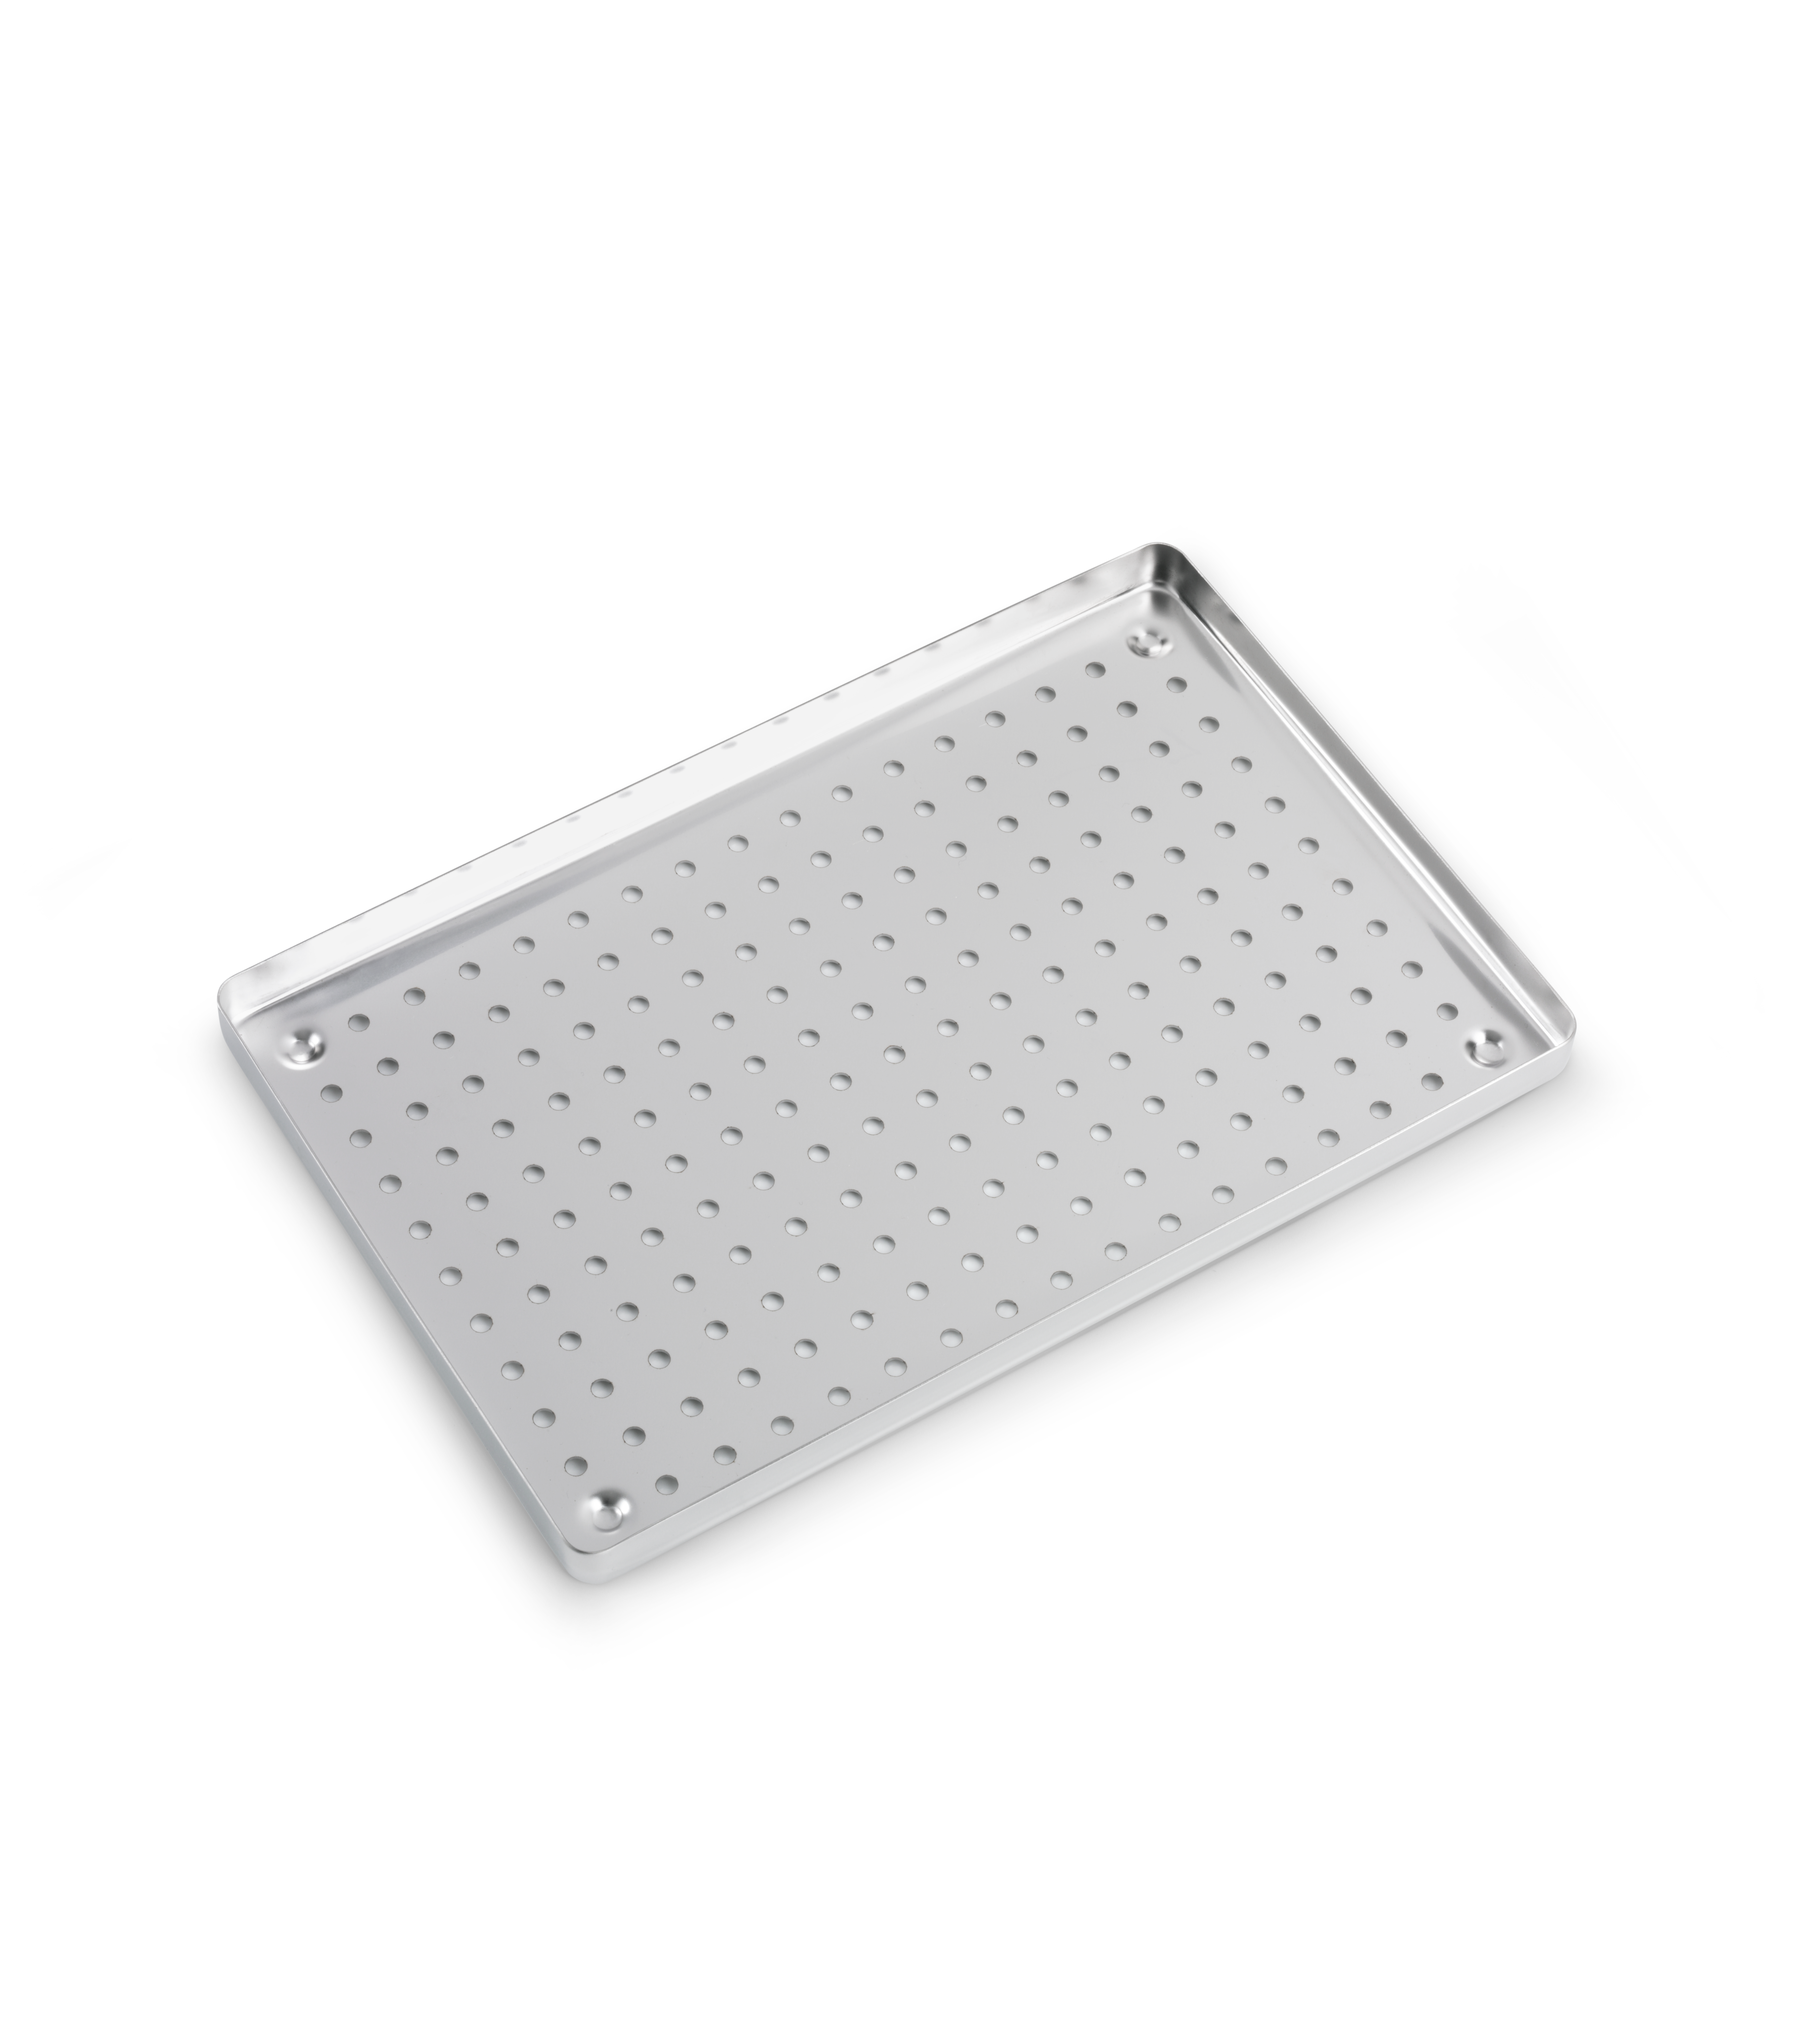 Standard Stainless Steel Tray (28cm x 18cm) 